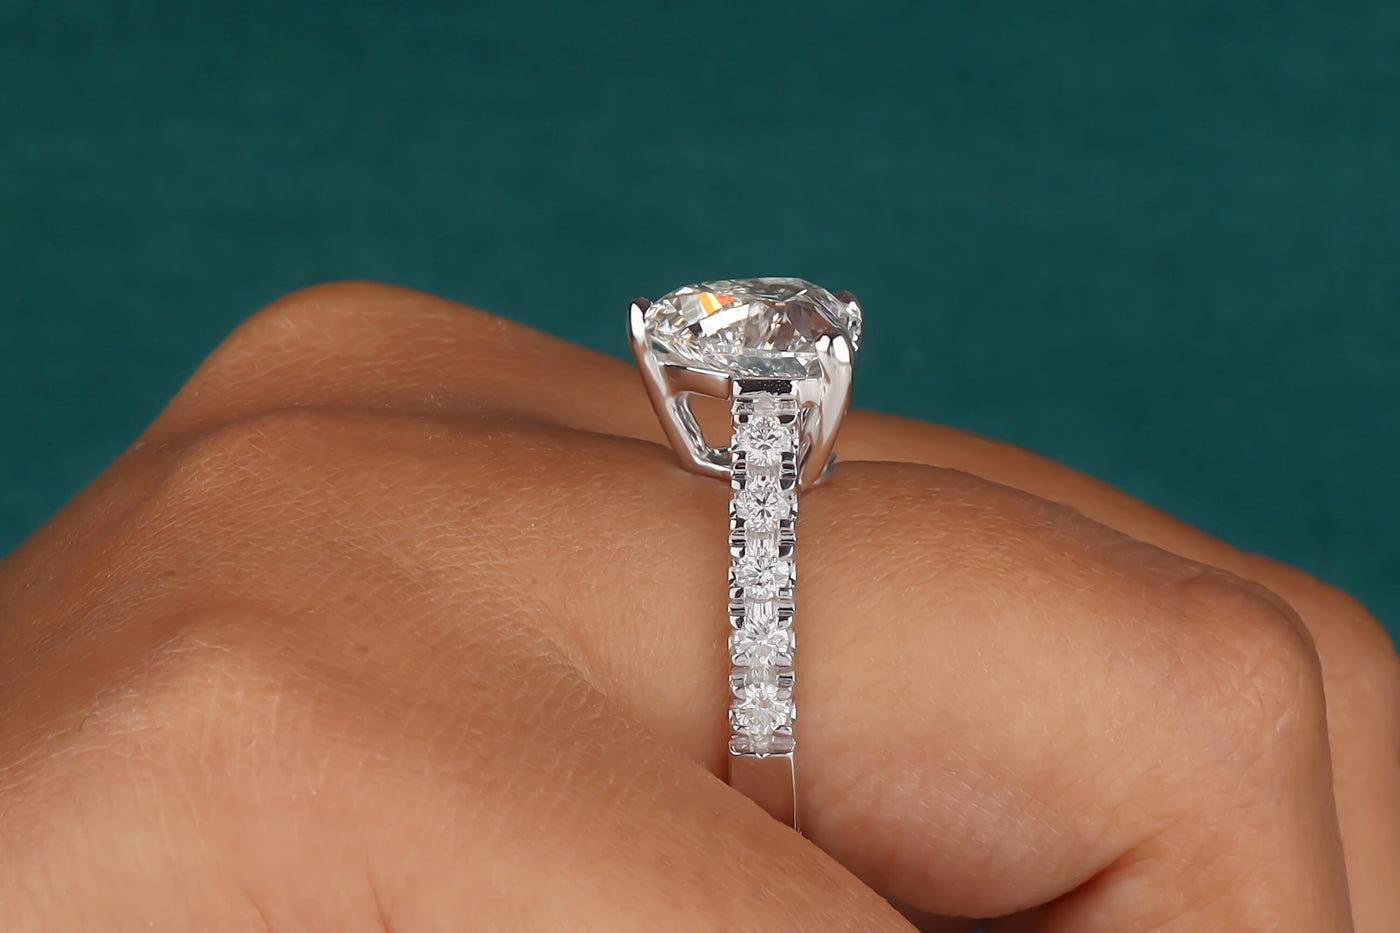 4.25 CT Heart Cut Colorless Moissanite Engagement Ring, Solid 14K White Gold Ring, Half Eternity Moissanite Wedding Ring, HandMade Ring Gift